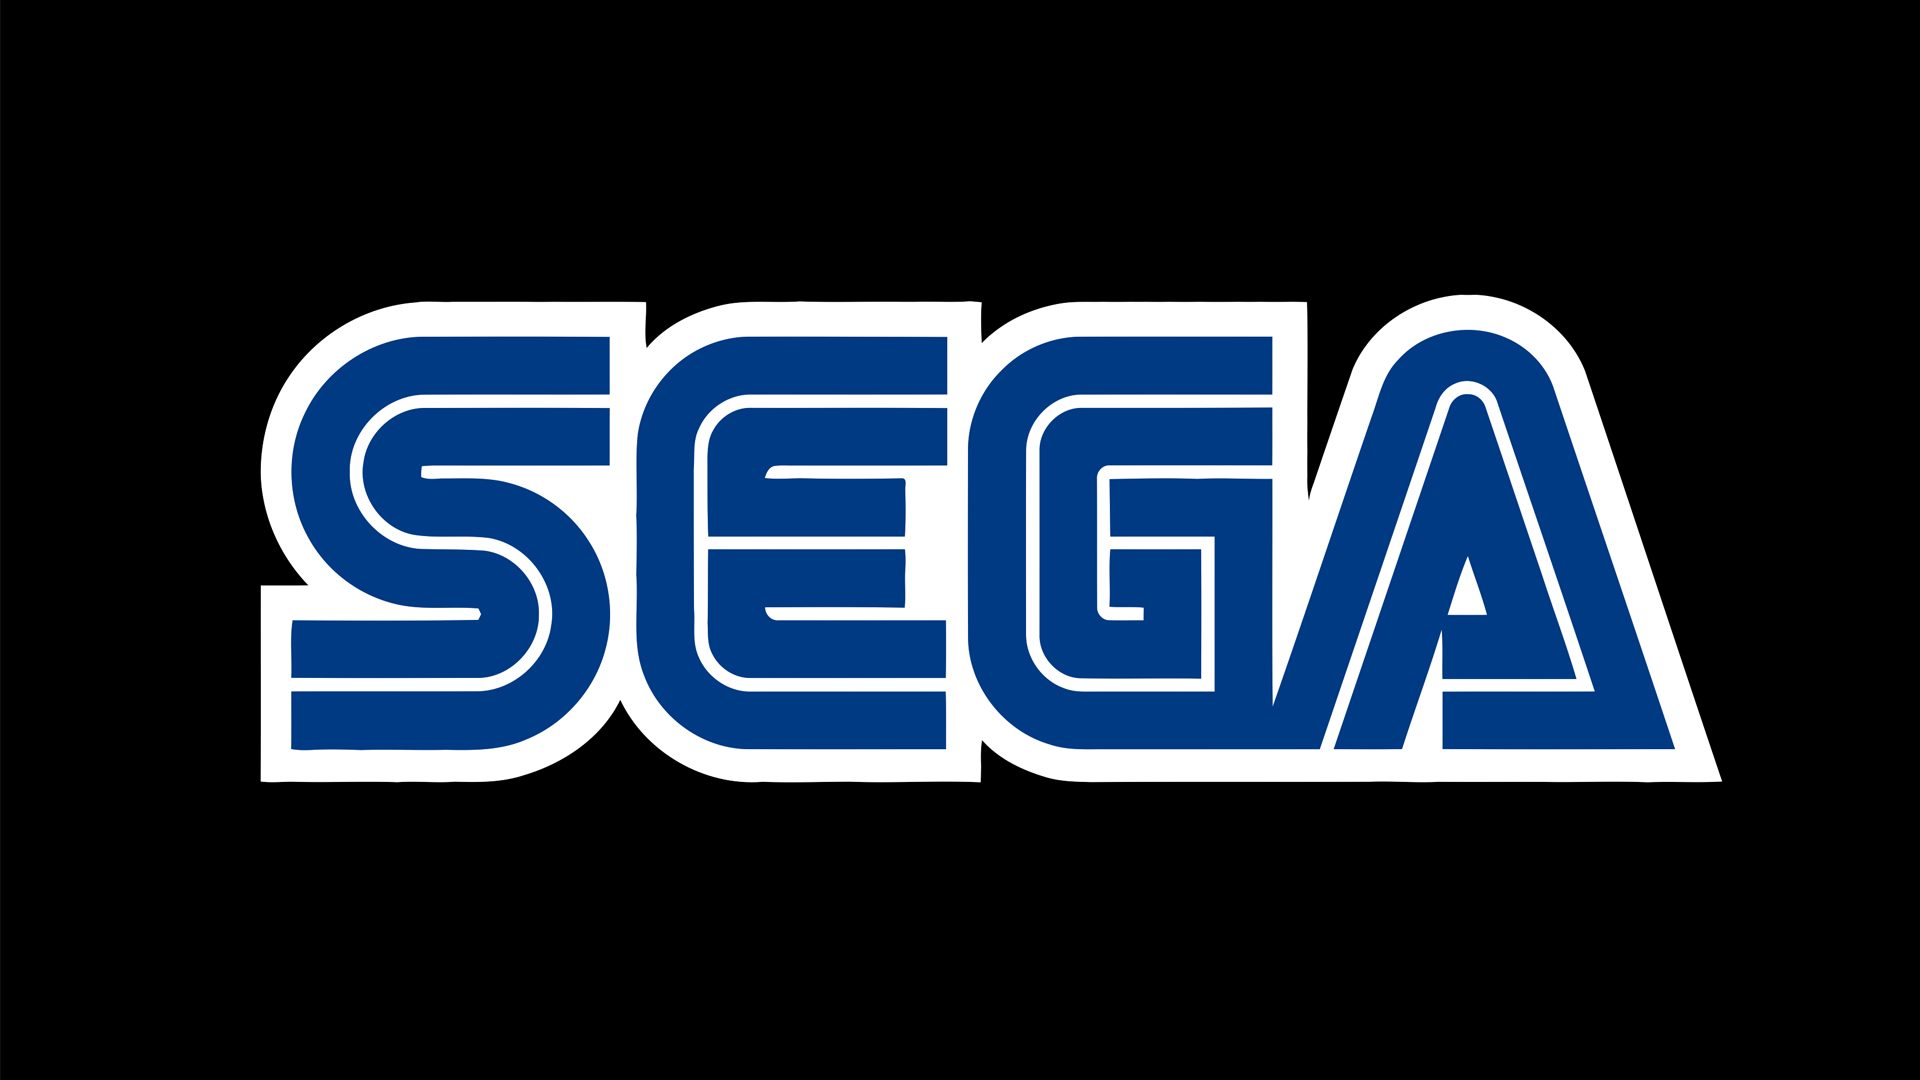 Sega-Logo-fonds-noir